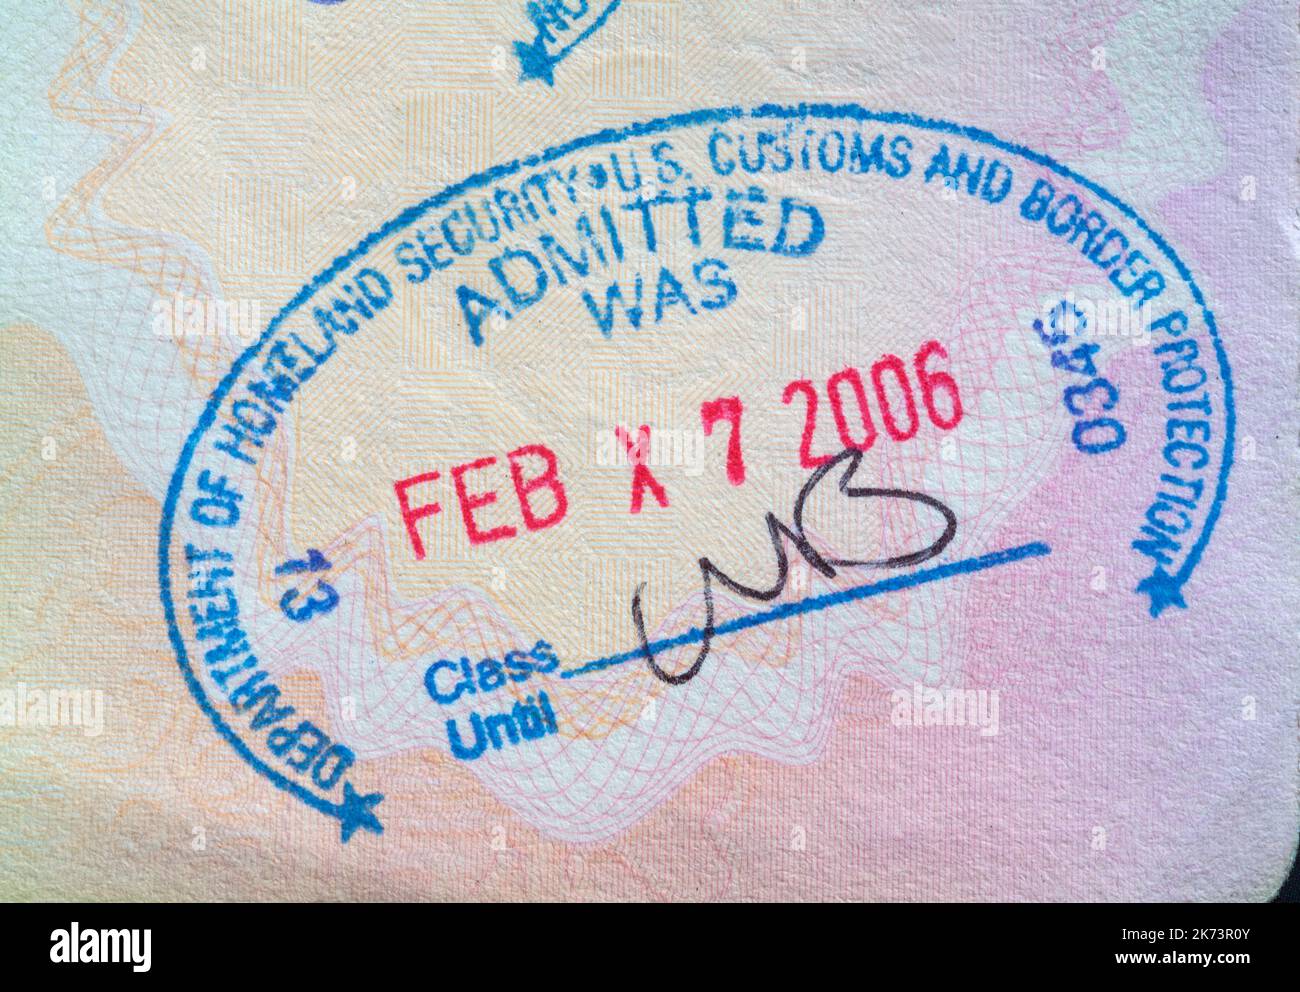 Department of Homeland Security US Customs and Border Protection Zugelassen WURDE WASHINGTON, DC - Stempel im britischen Pass Februar X7 2006 Stockfoto